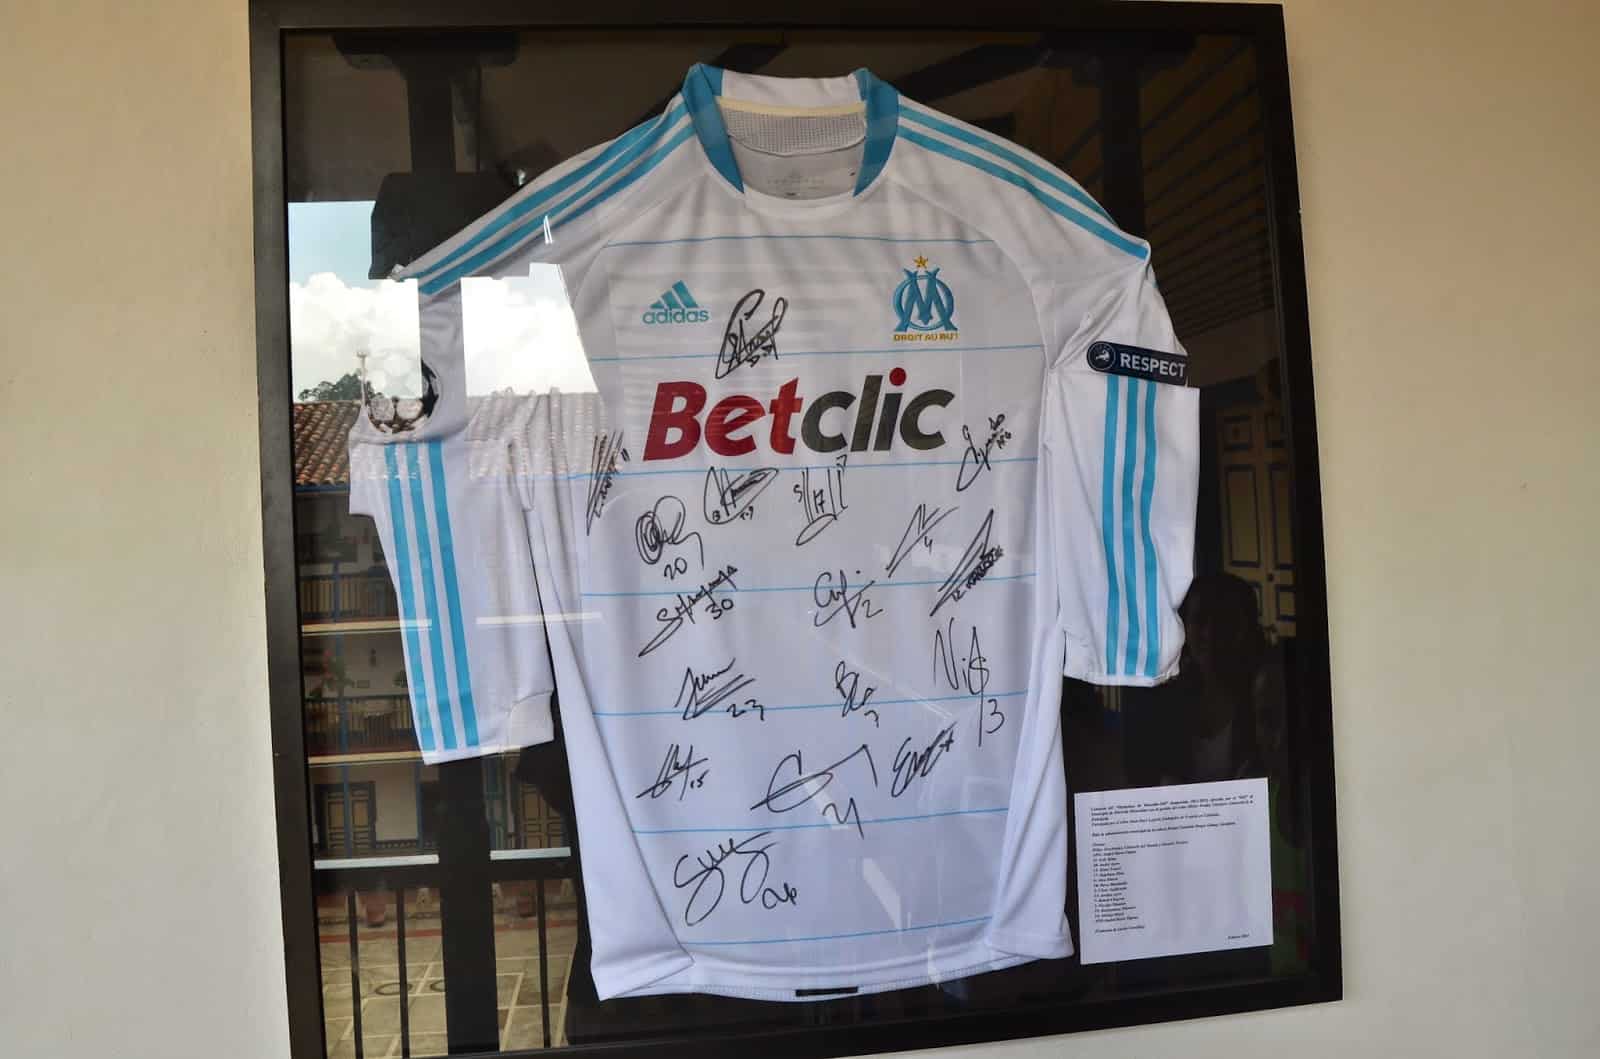 Signed football jersey from Olympique de Marseille at the Casa de la Cultura in Marsella, Risaralda, Colombia